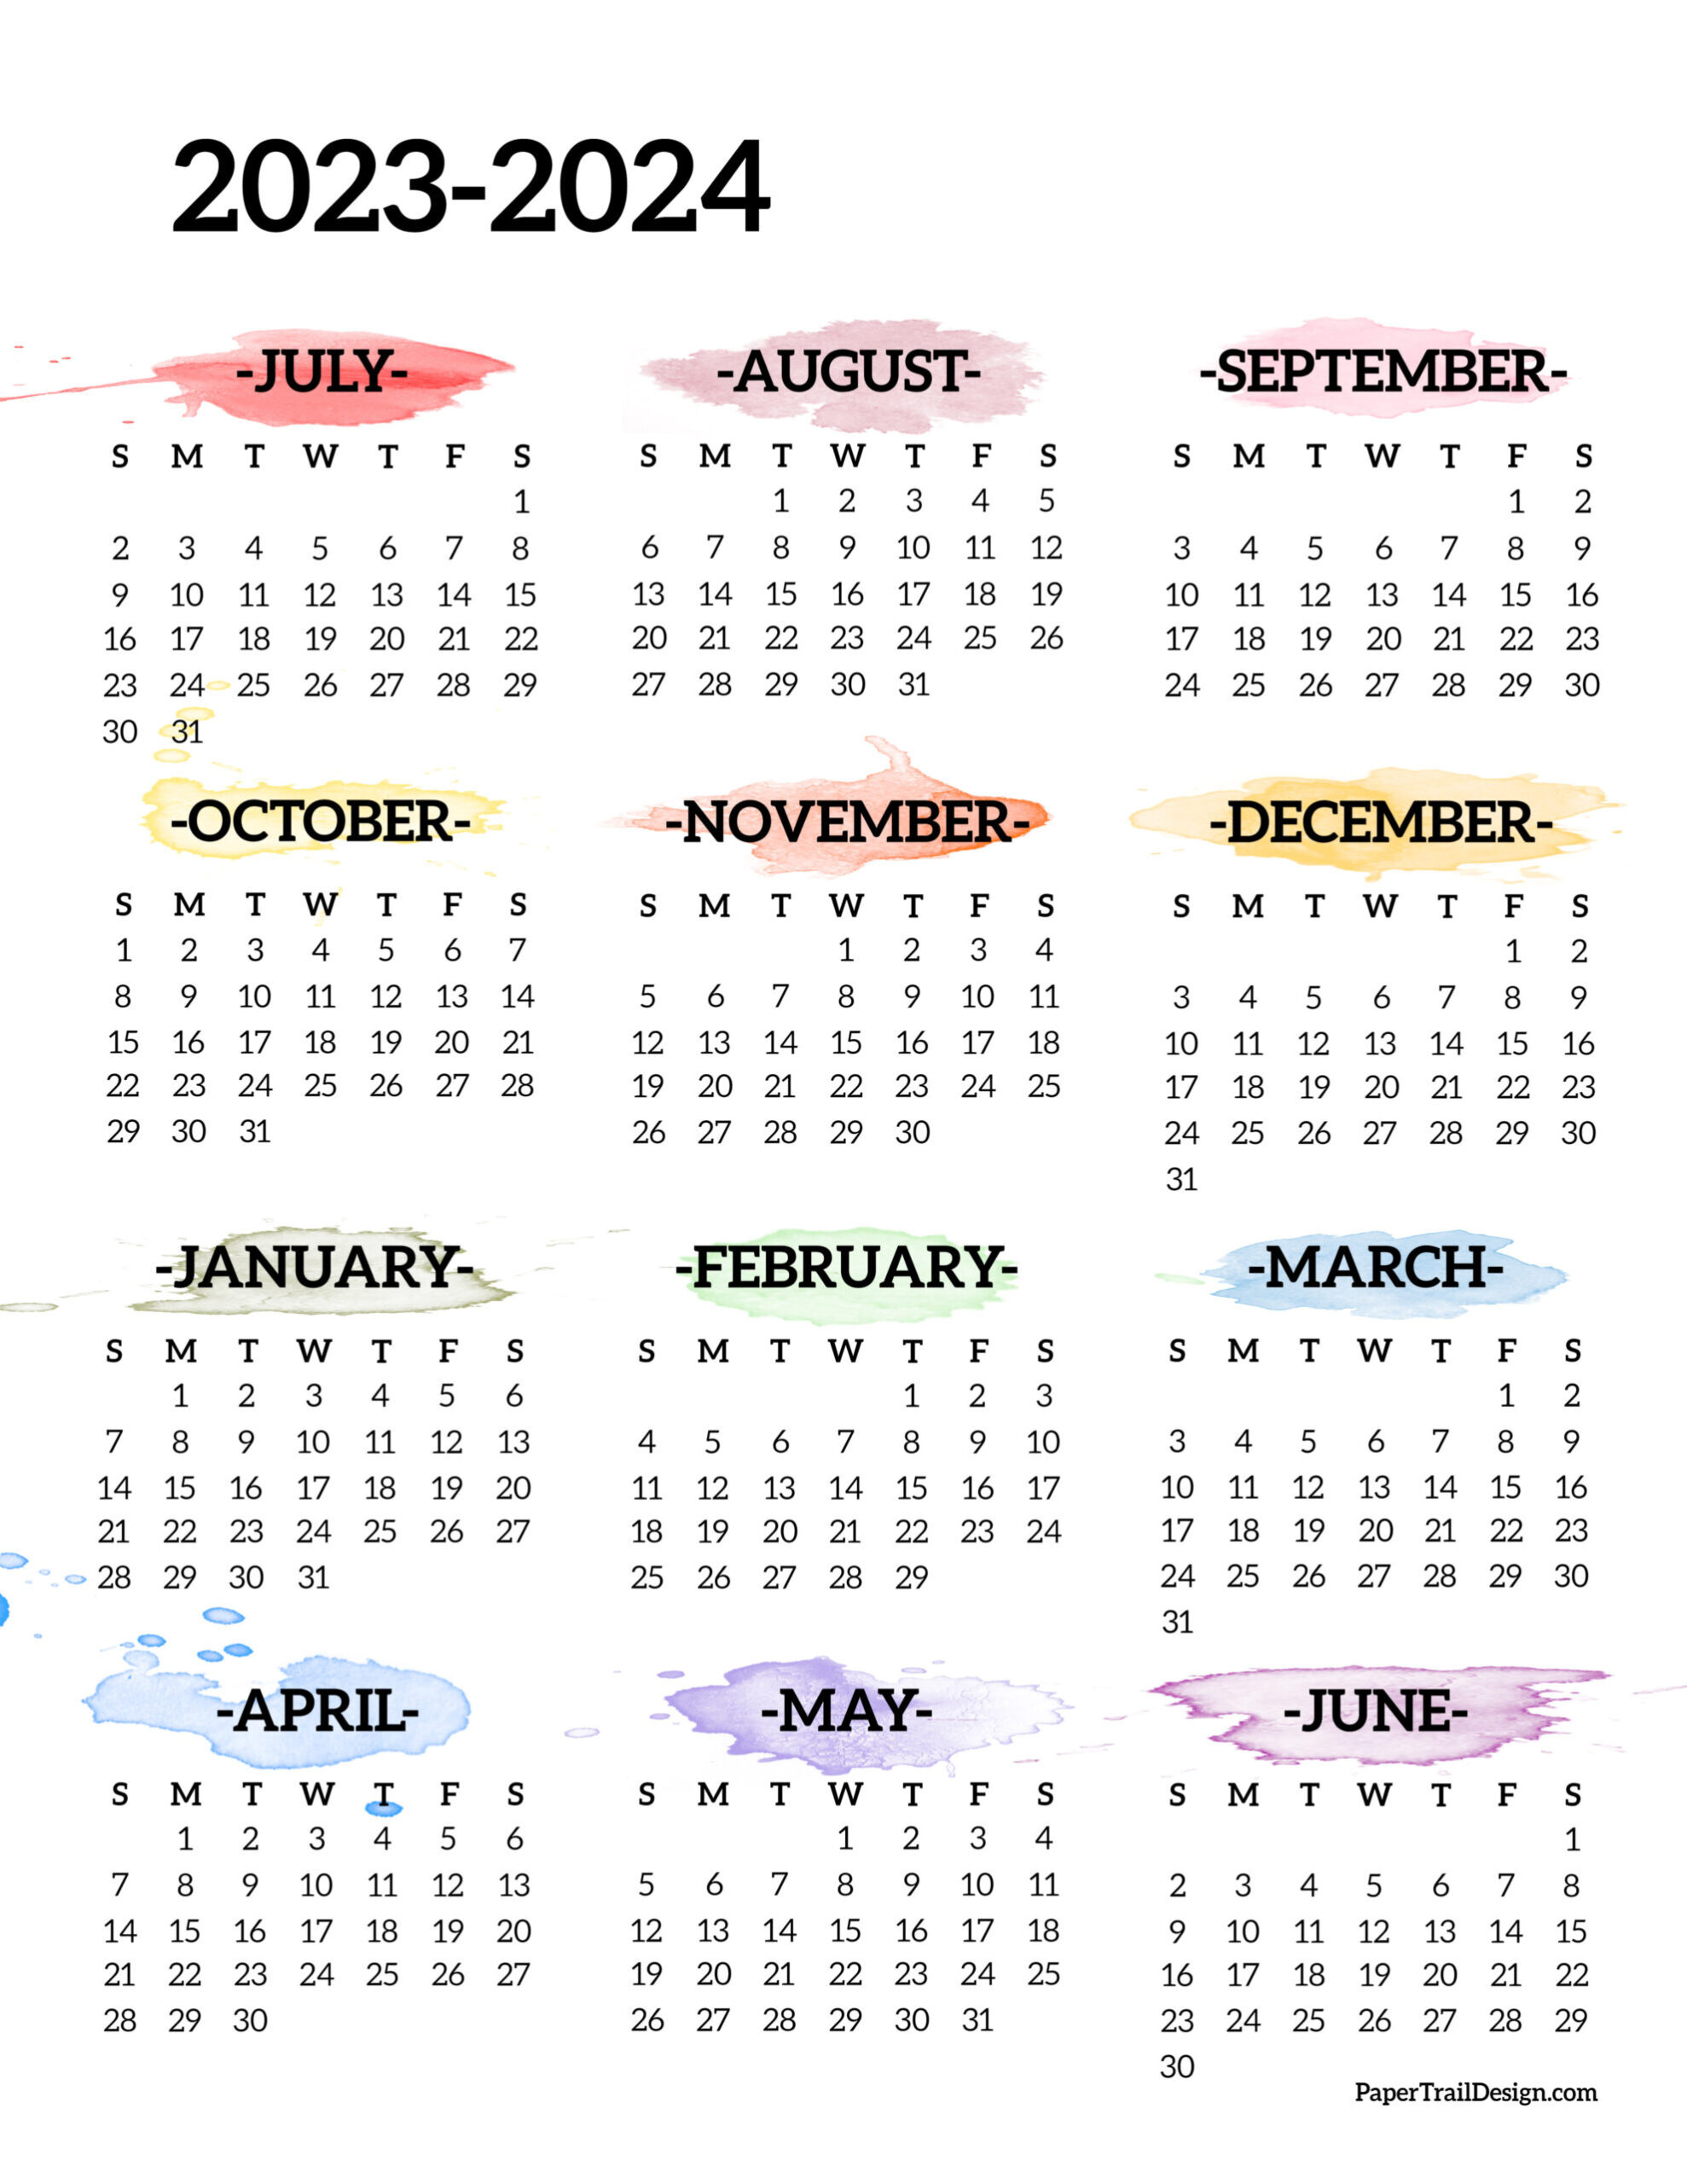 2023-2024 School Year Calendar Free Printable - Paper Trail Design pertaining to July 2023 To June 2024 Calendar Printable Free